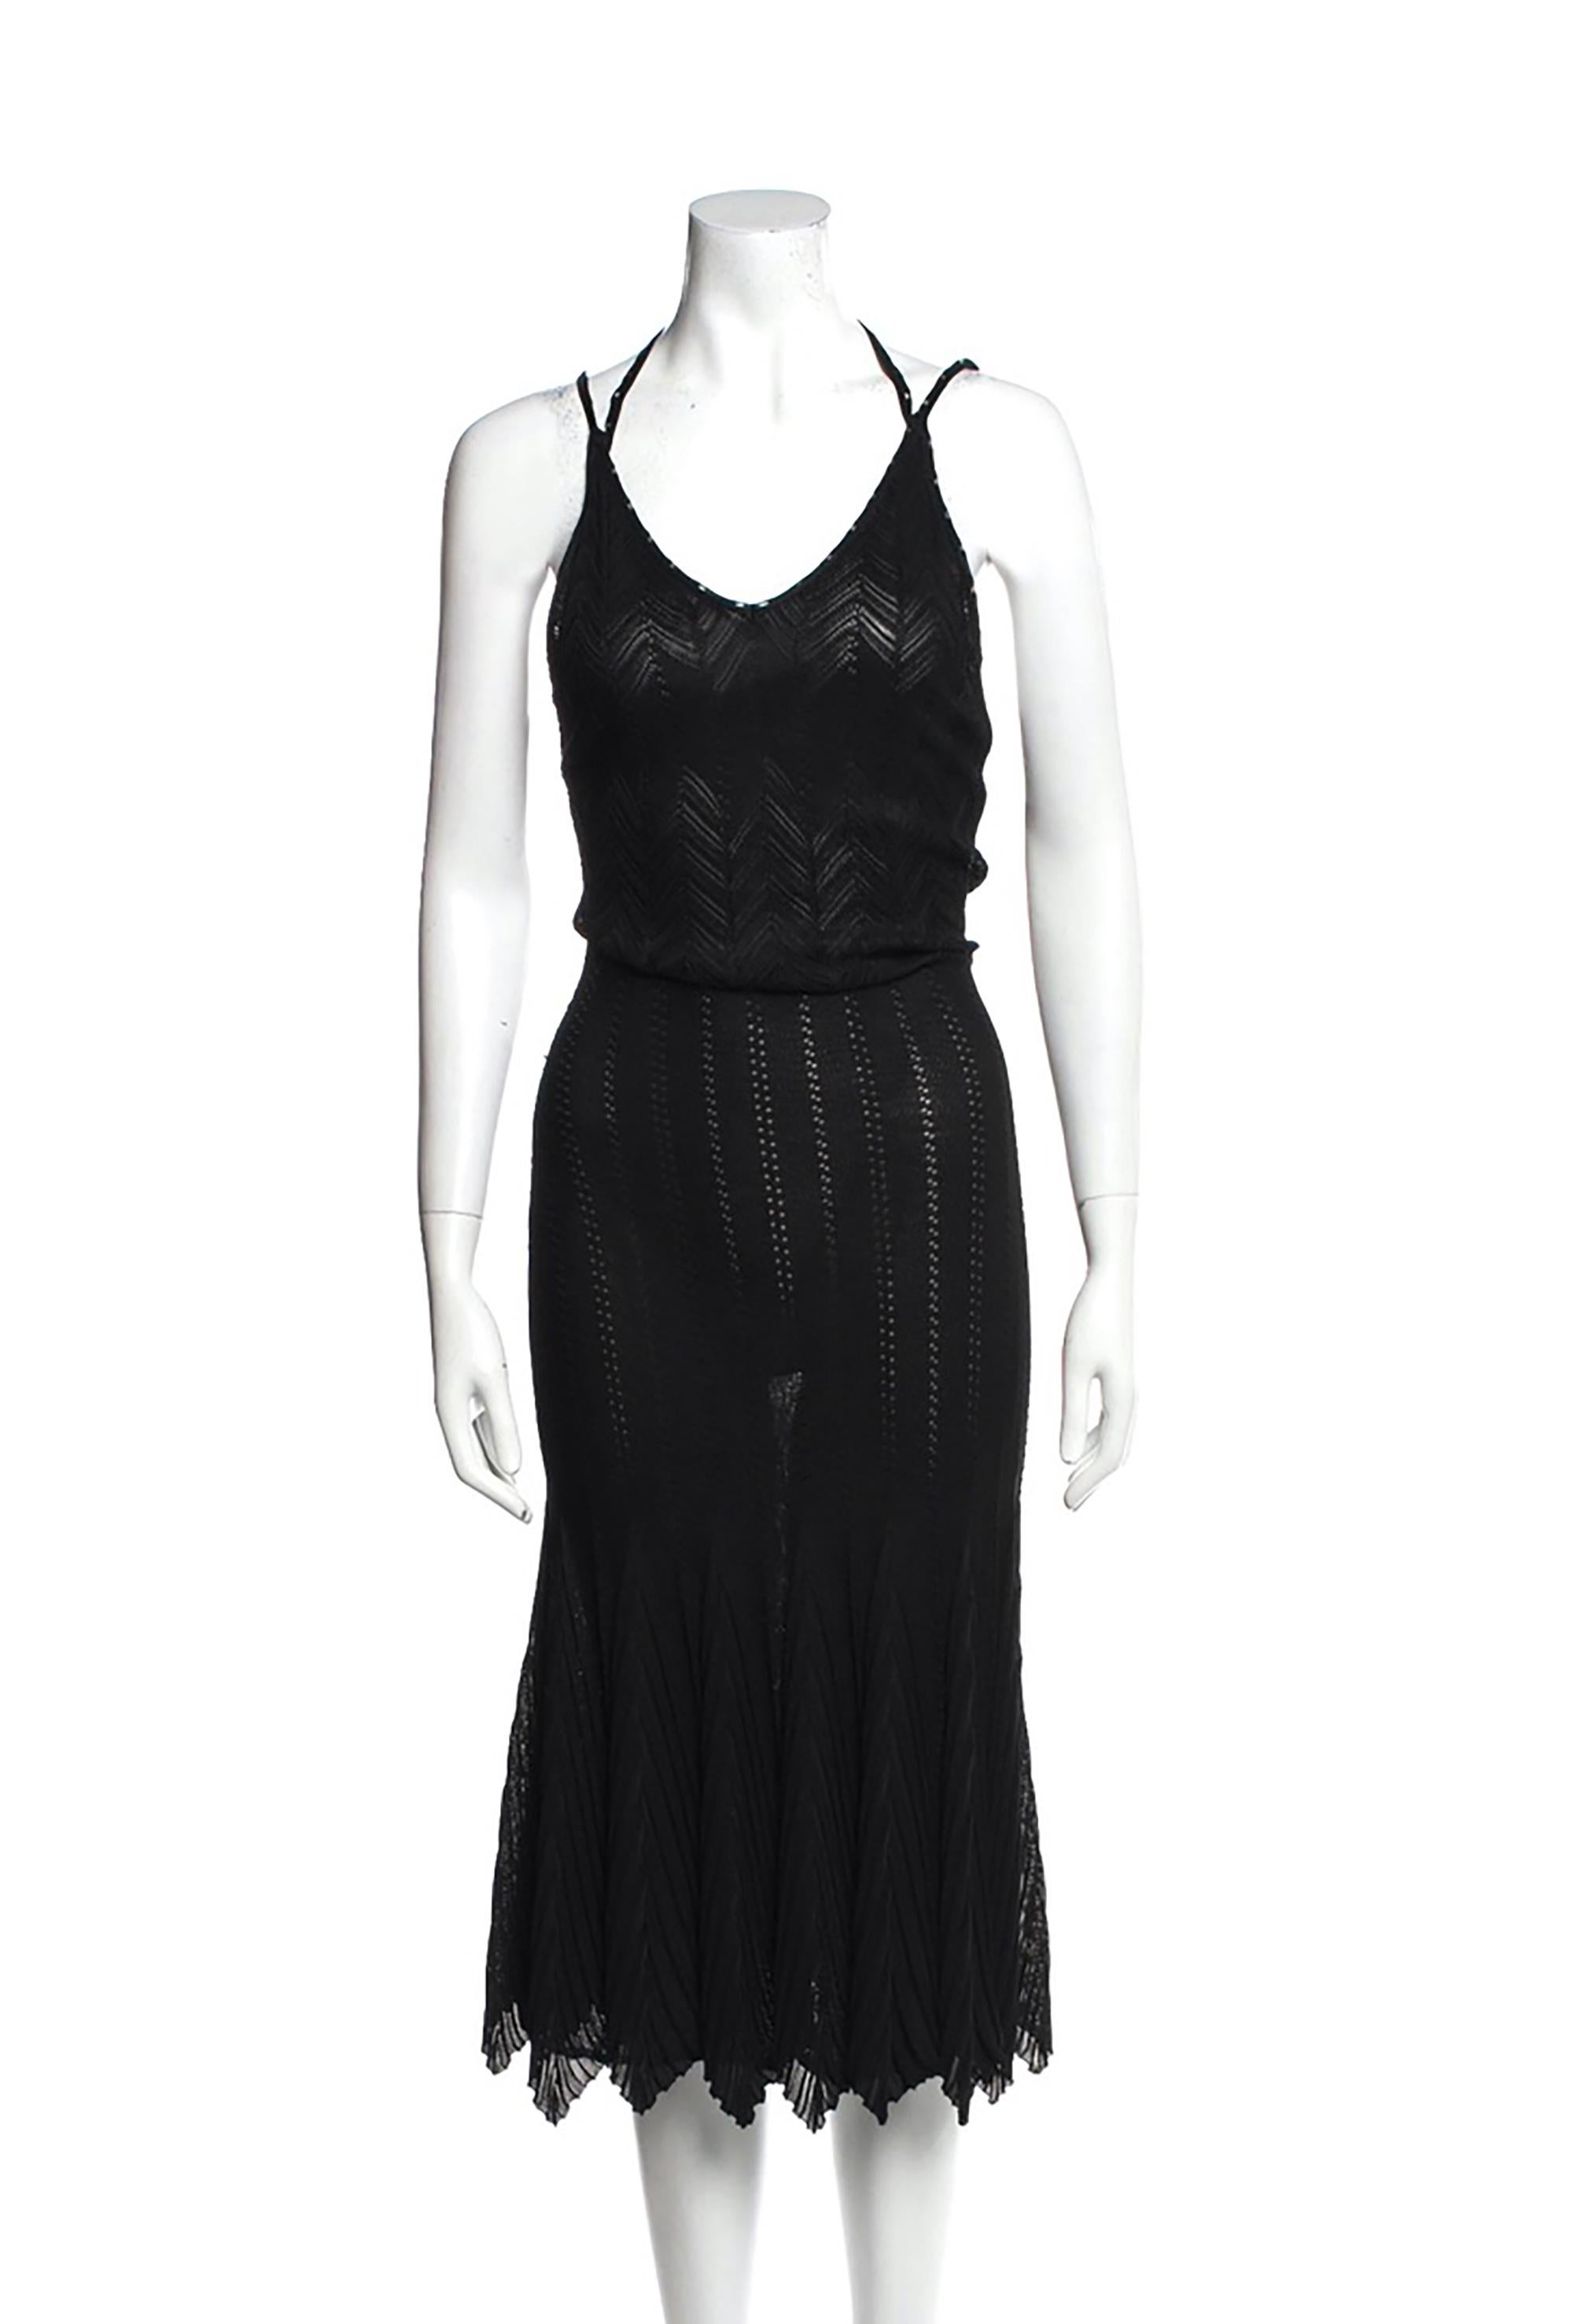 Christian Dior Slip Dress
Condition: Excellent
Bust: 25